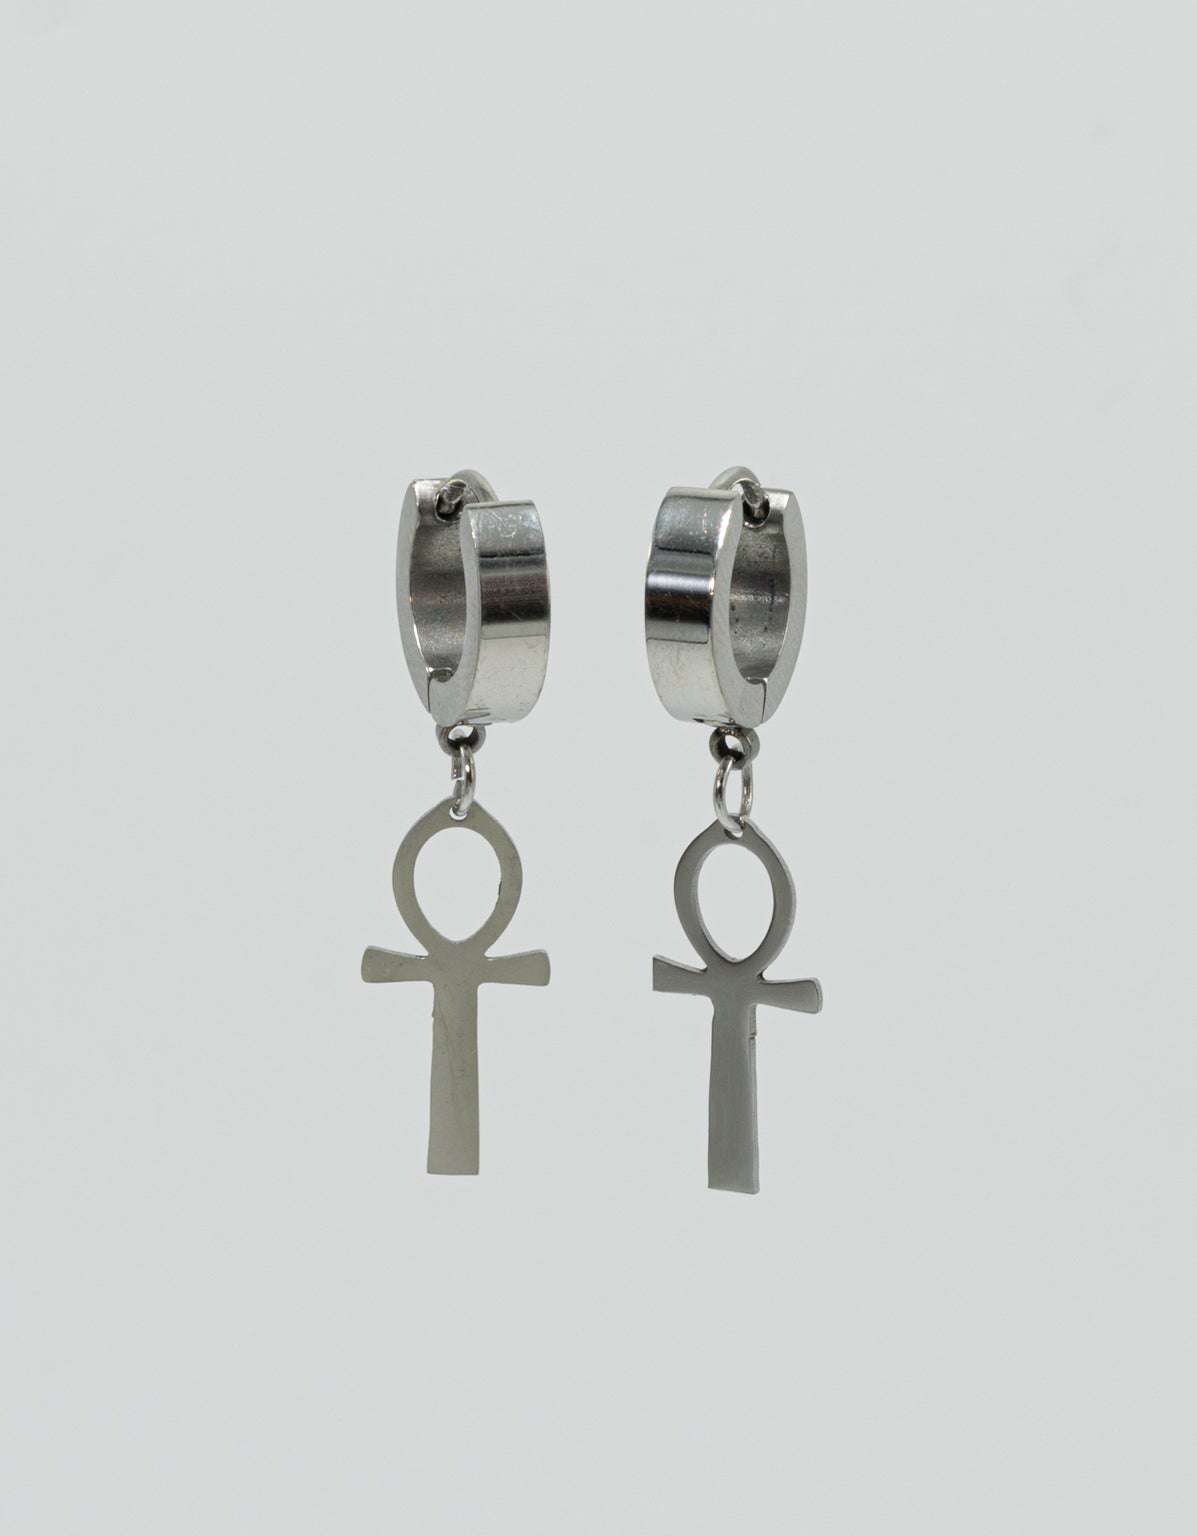 Stylish Ankh Earrings for Men and Women - ClassicsJewelryGifts